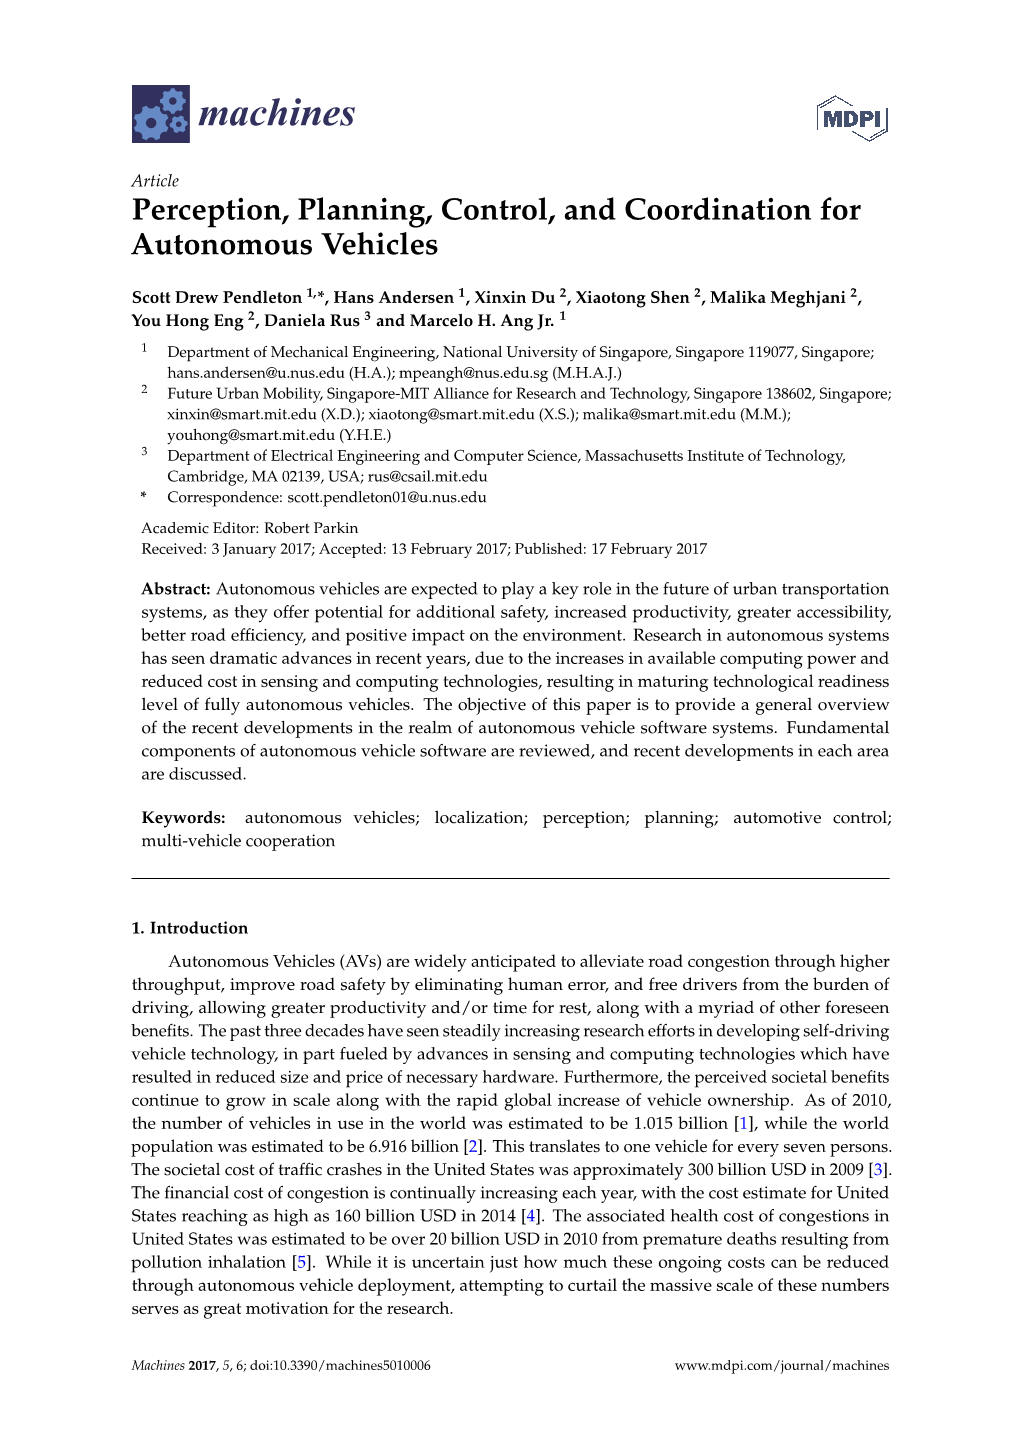 Perception, Planning, Control, and Coordination for Autonomous Vehicles